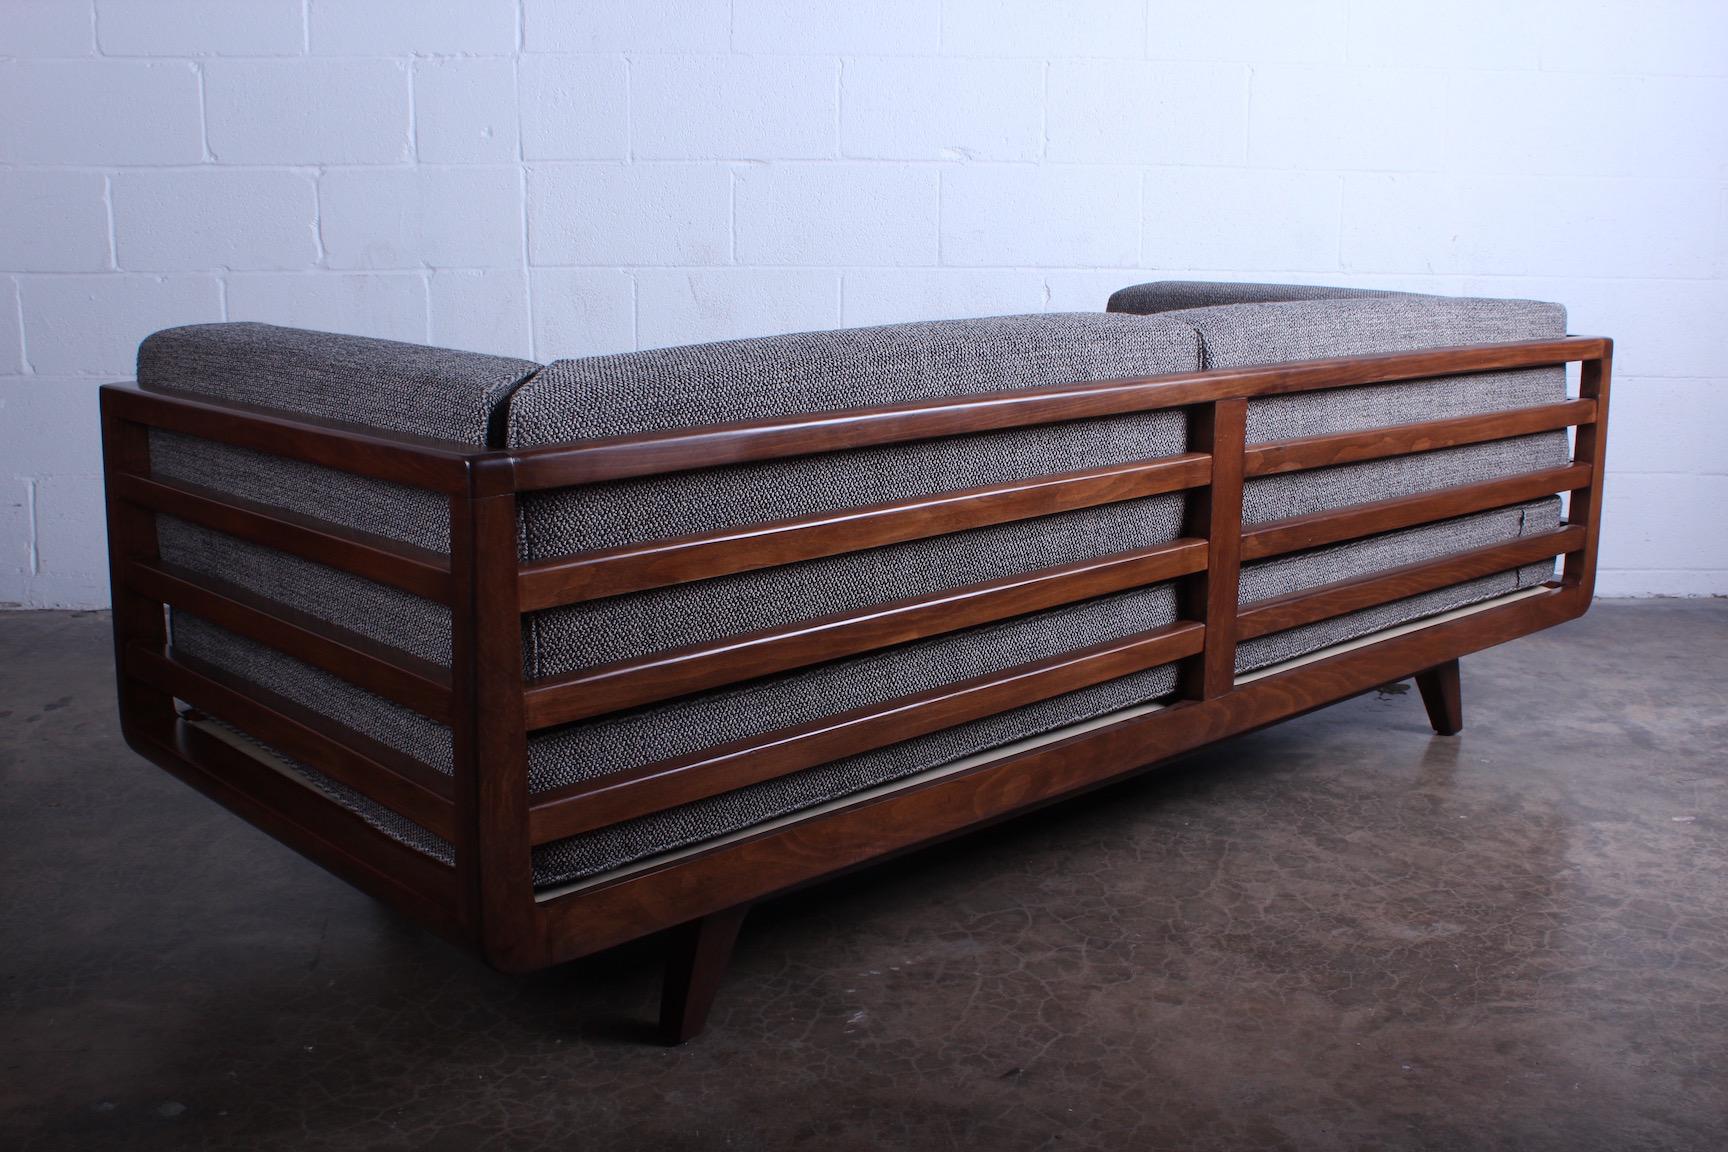 Sofa by Edward Wormley for Drexel 1